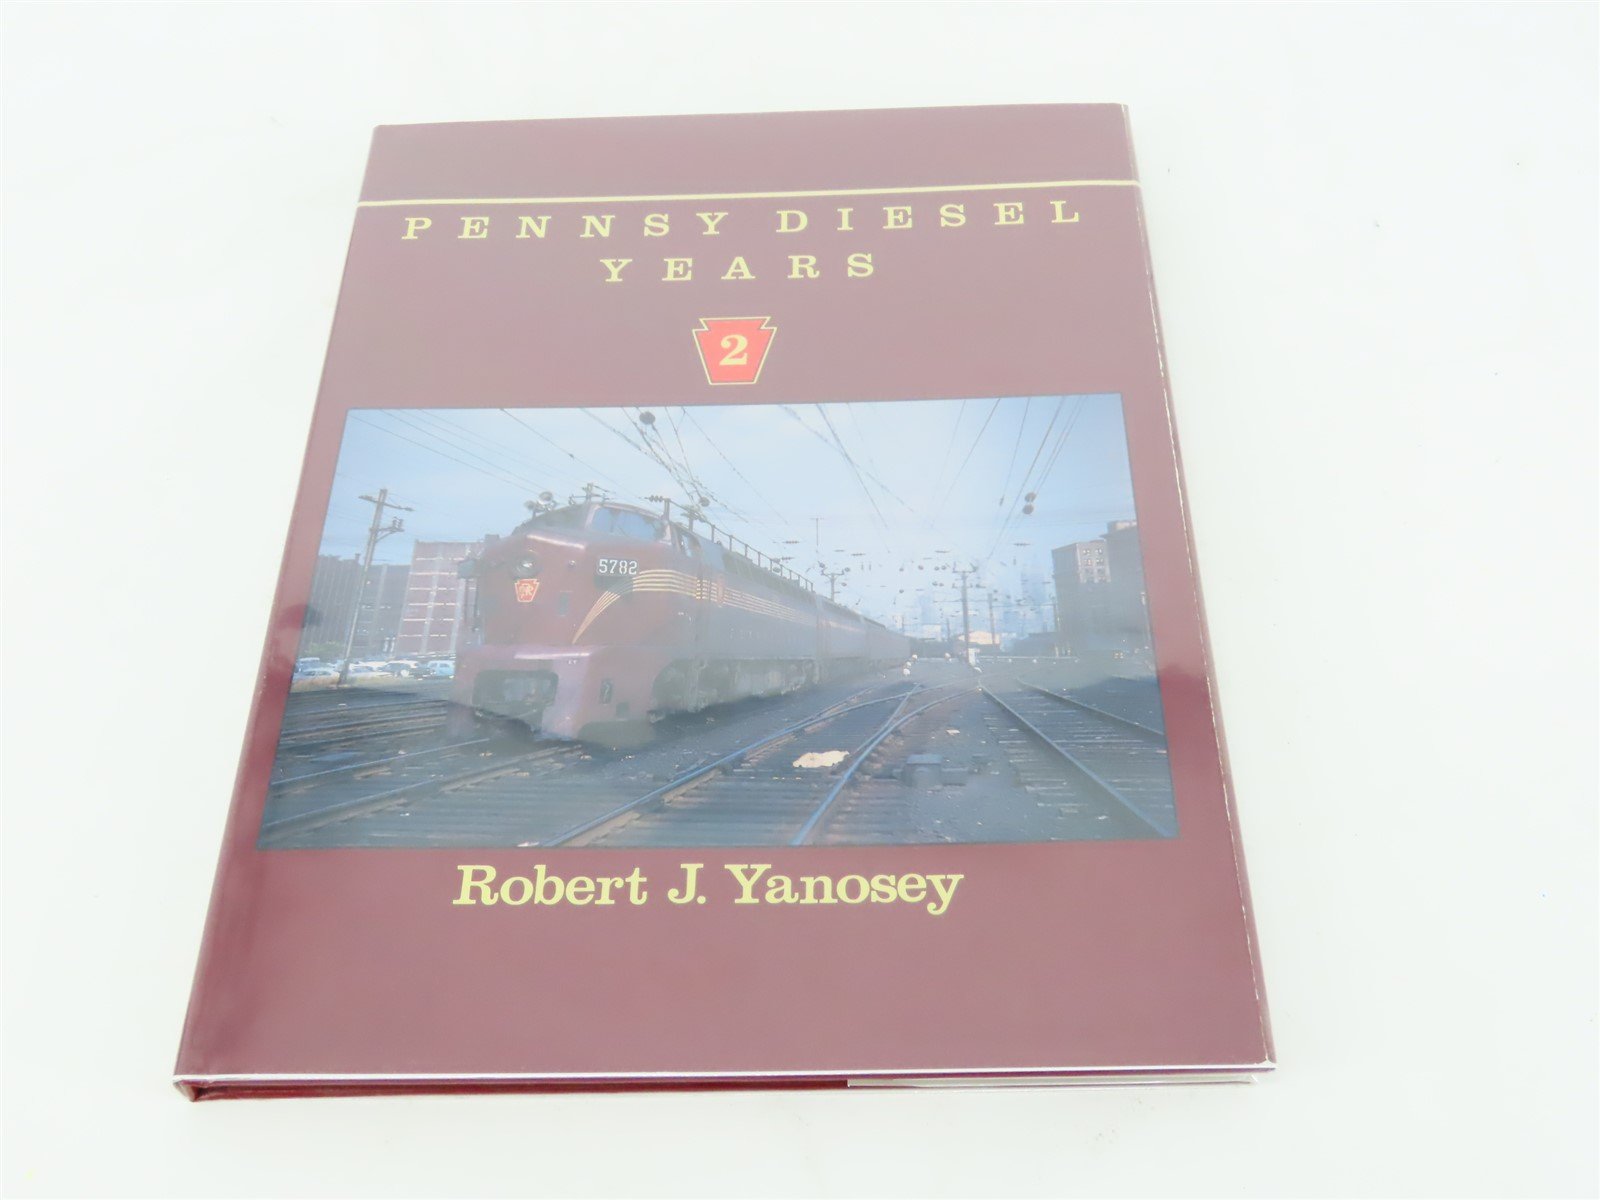 Morning Sun: Pennsy Diesel Years Volume 2 by Robert J Yanosey ©1989 HC Book